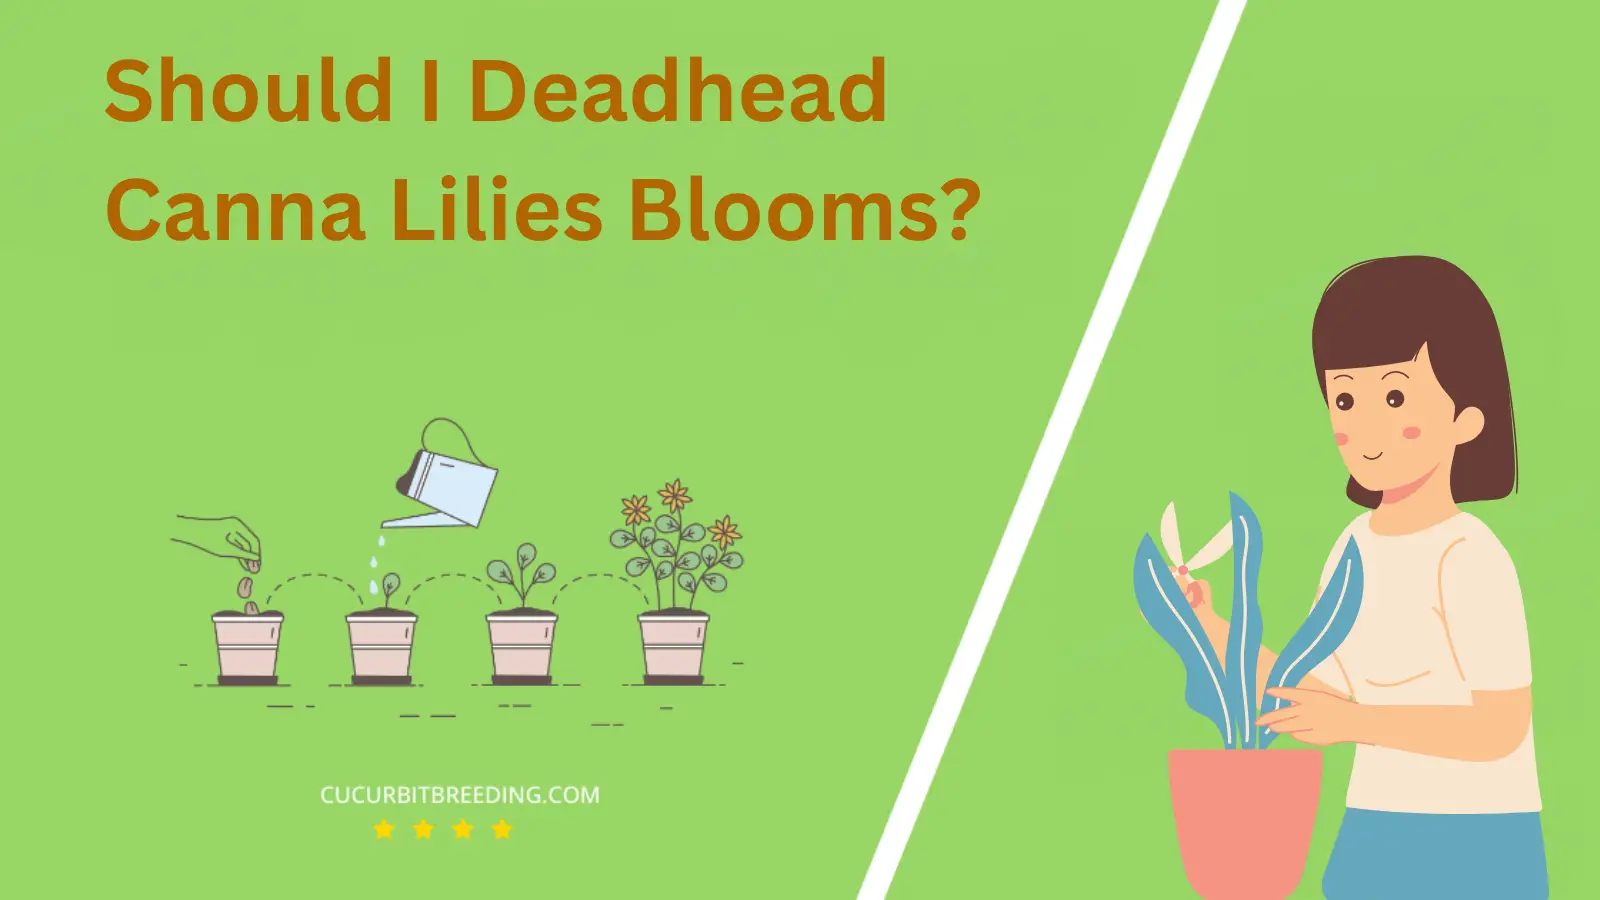 Should I Deadhead Canna Lilies Blooms?